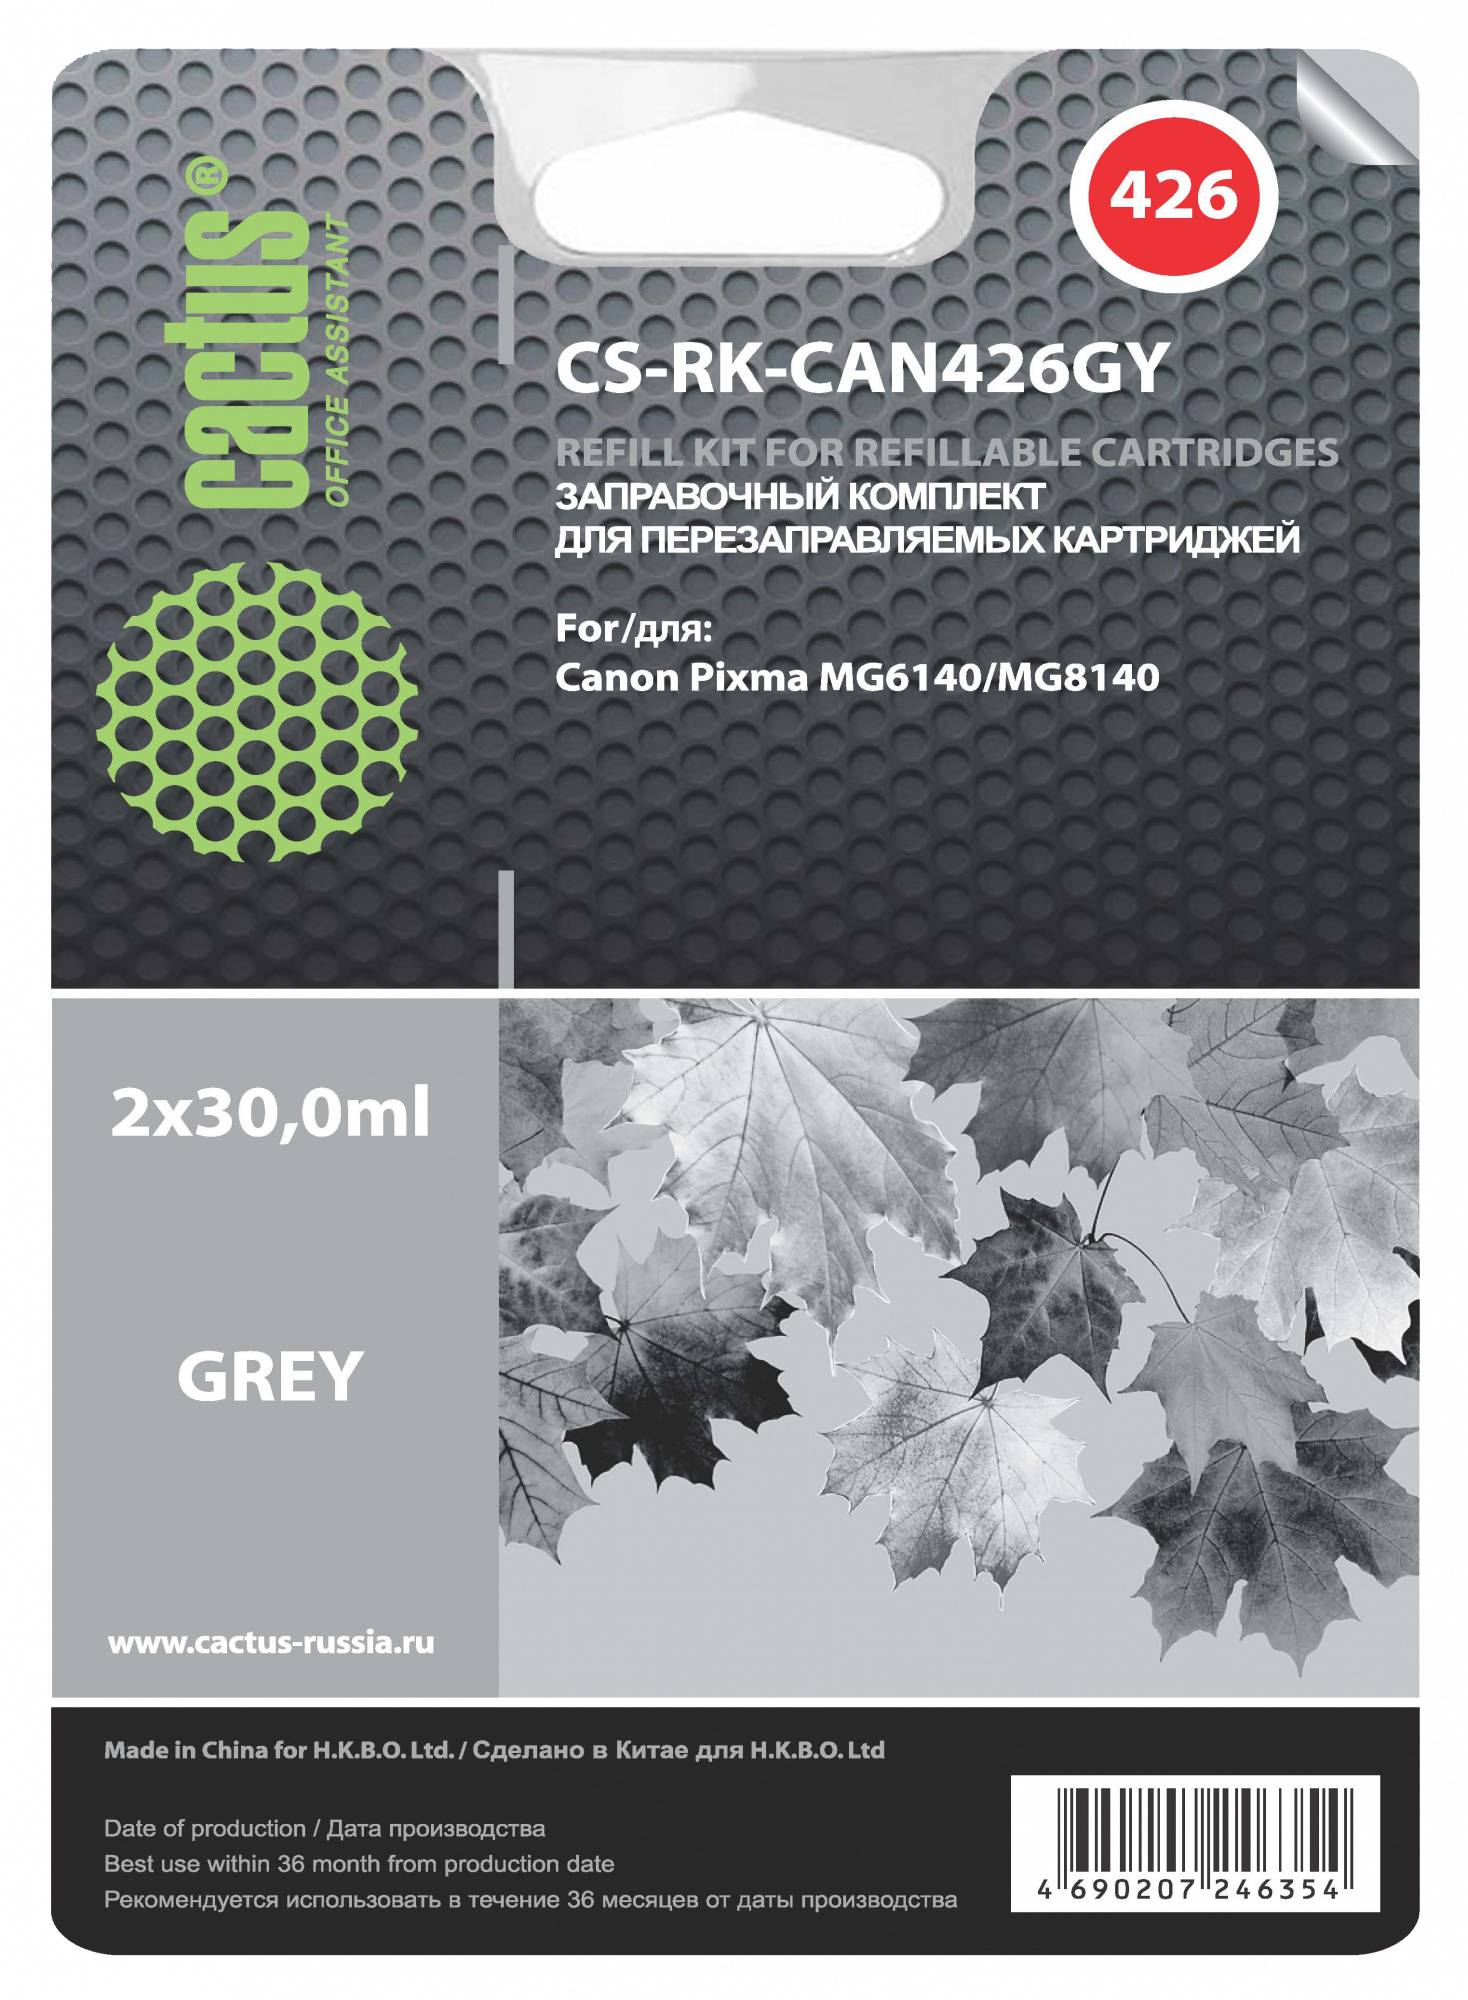 Заправка для ПЗК Cactus CS-RK-CAN426GY серый 2xфл. 30мл для Canon Pixma iP4840